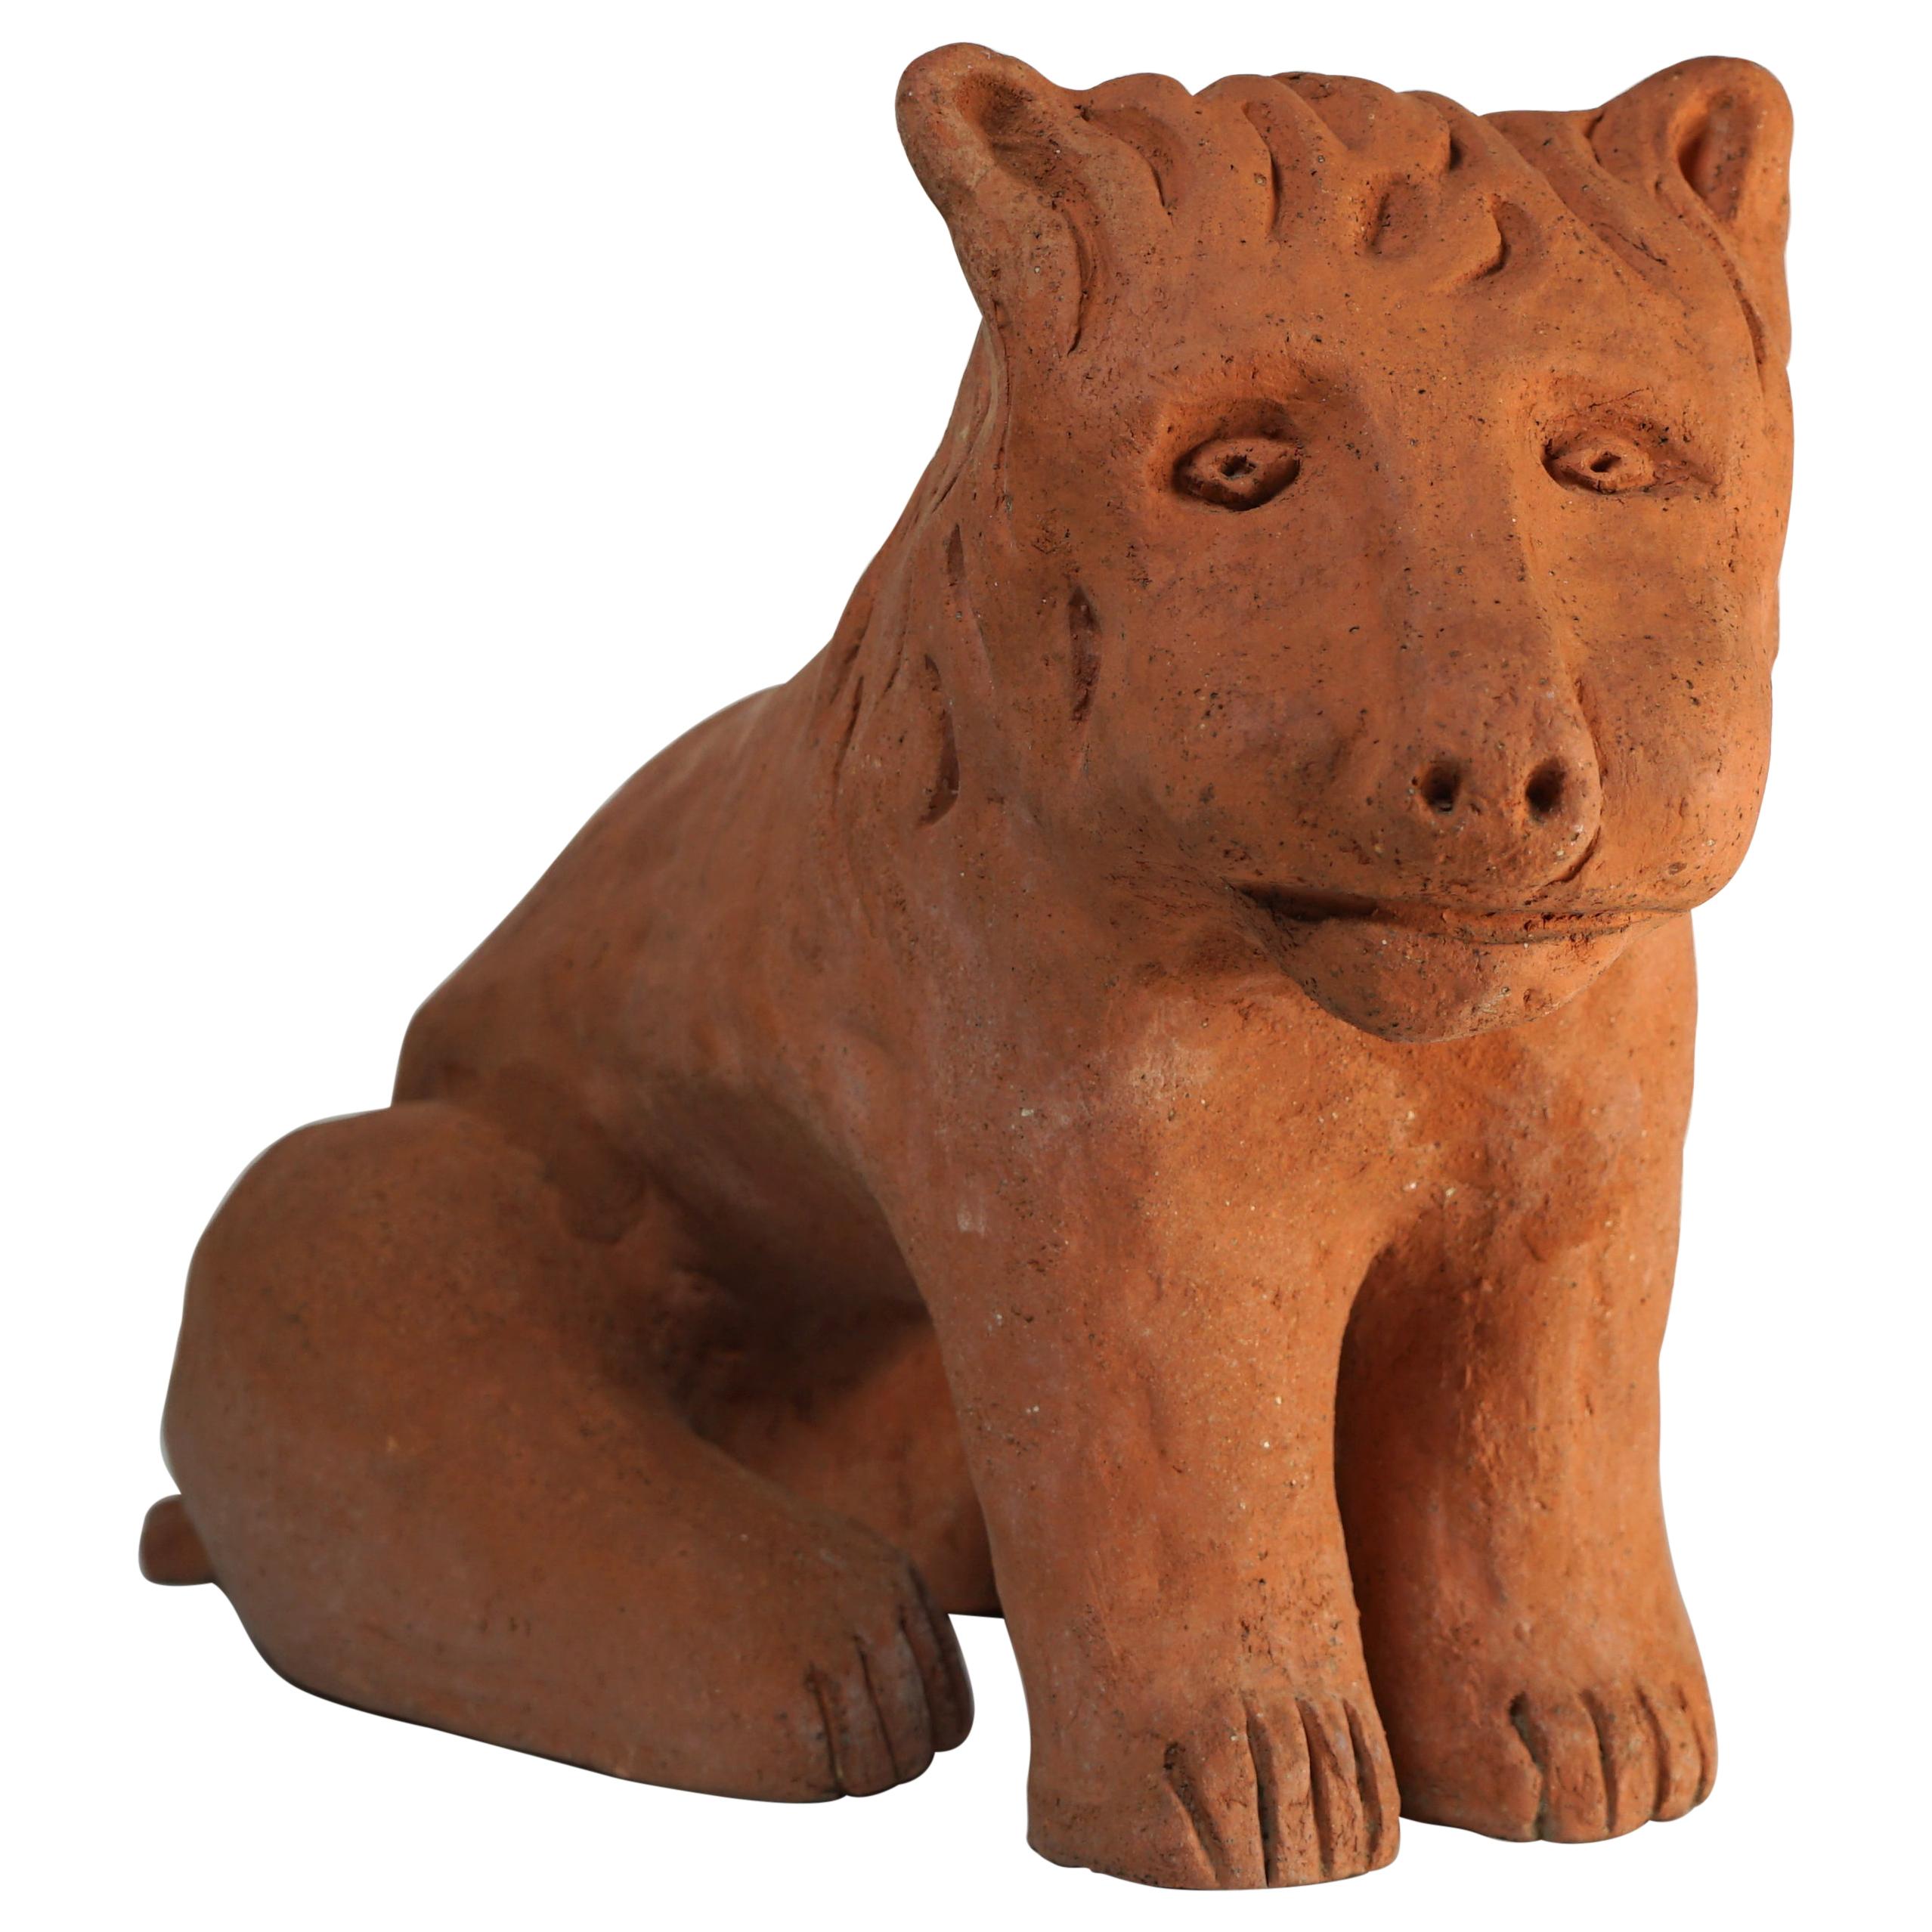 Ceramic Sculpture Lion Model by Nathalie Du Pasquier for Alessio Sarri Editions